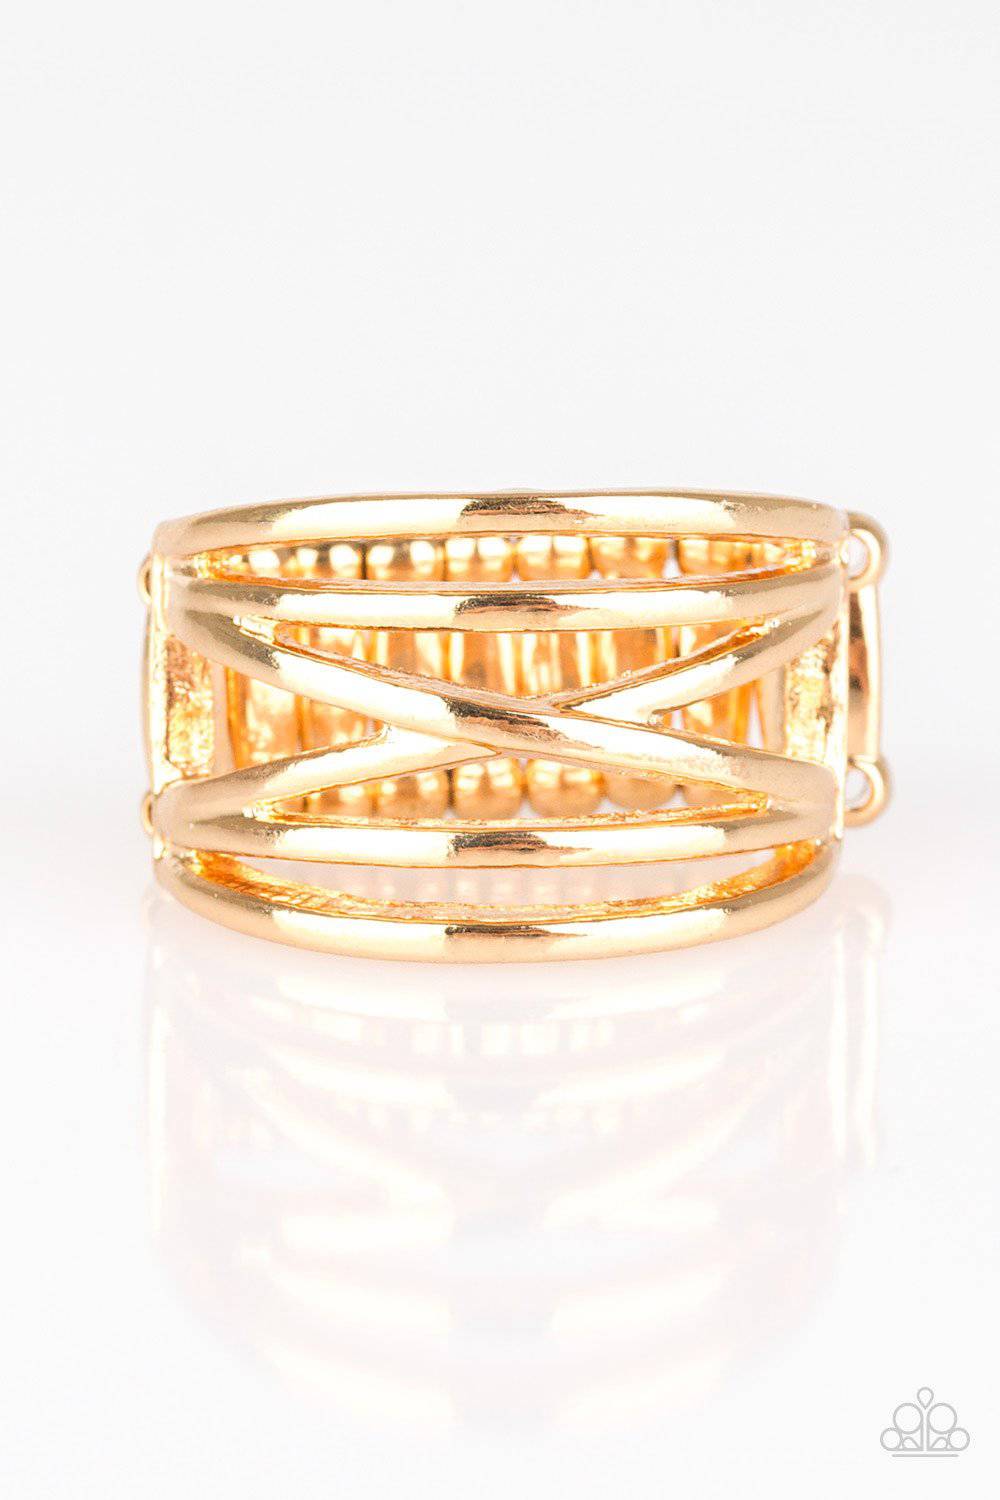 Way Wayward - Gold Crisscross Ring - Paparazzi Accessories - GlaMarous Titi Jewels